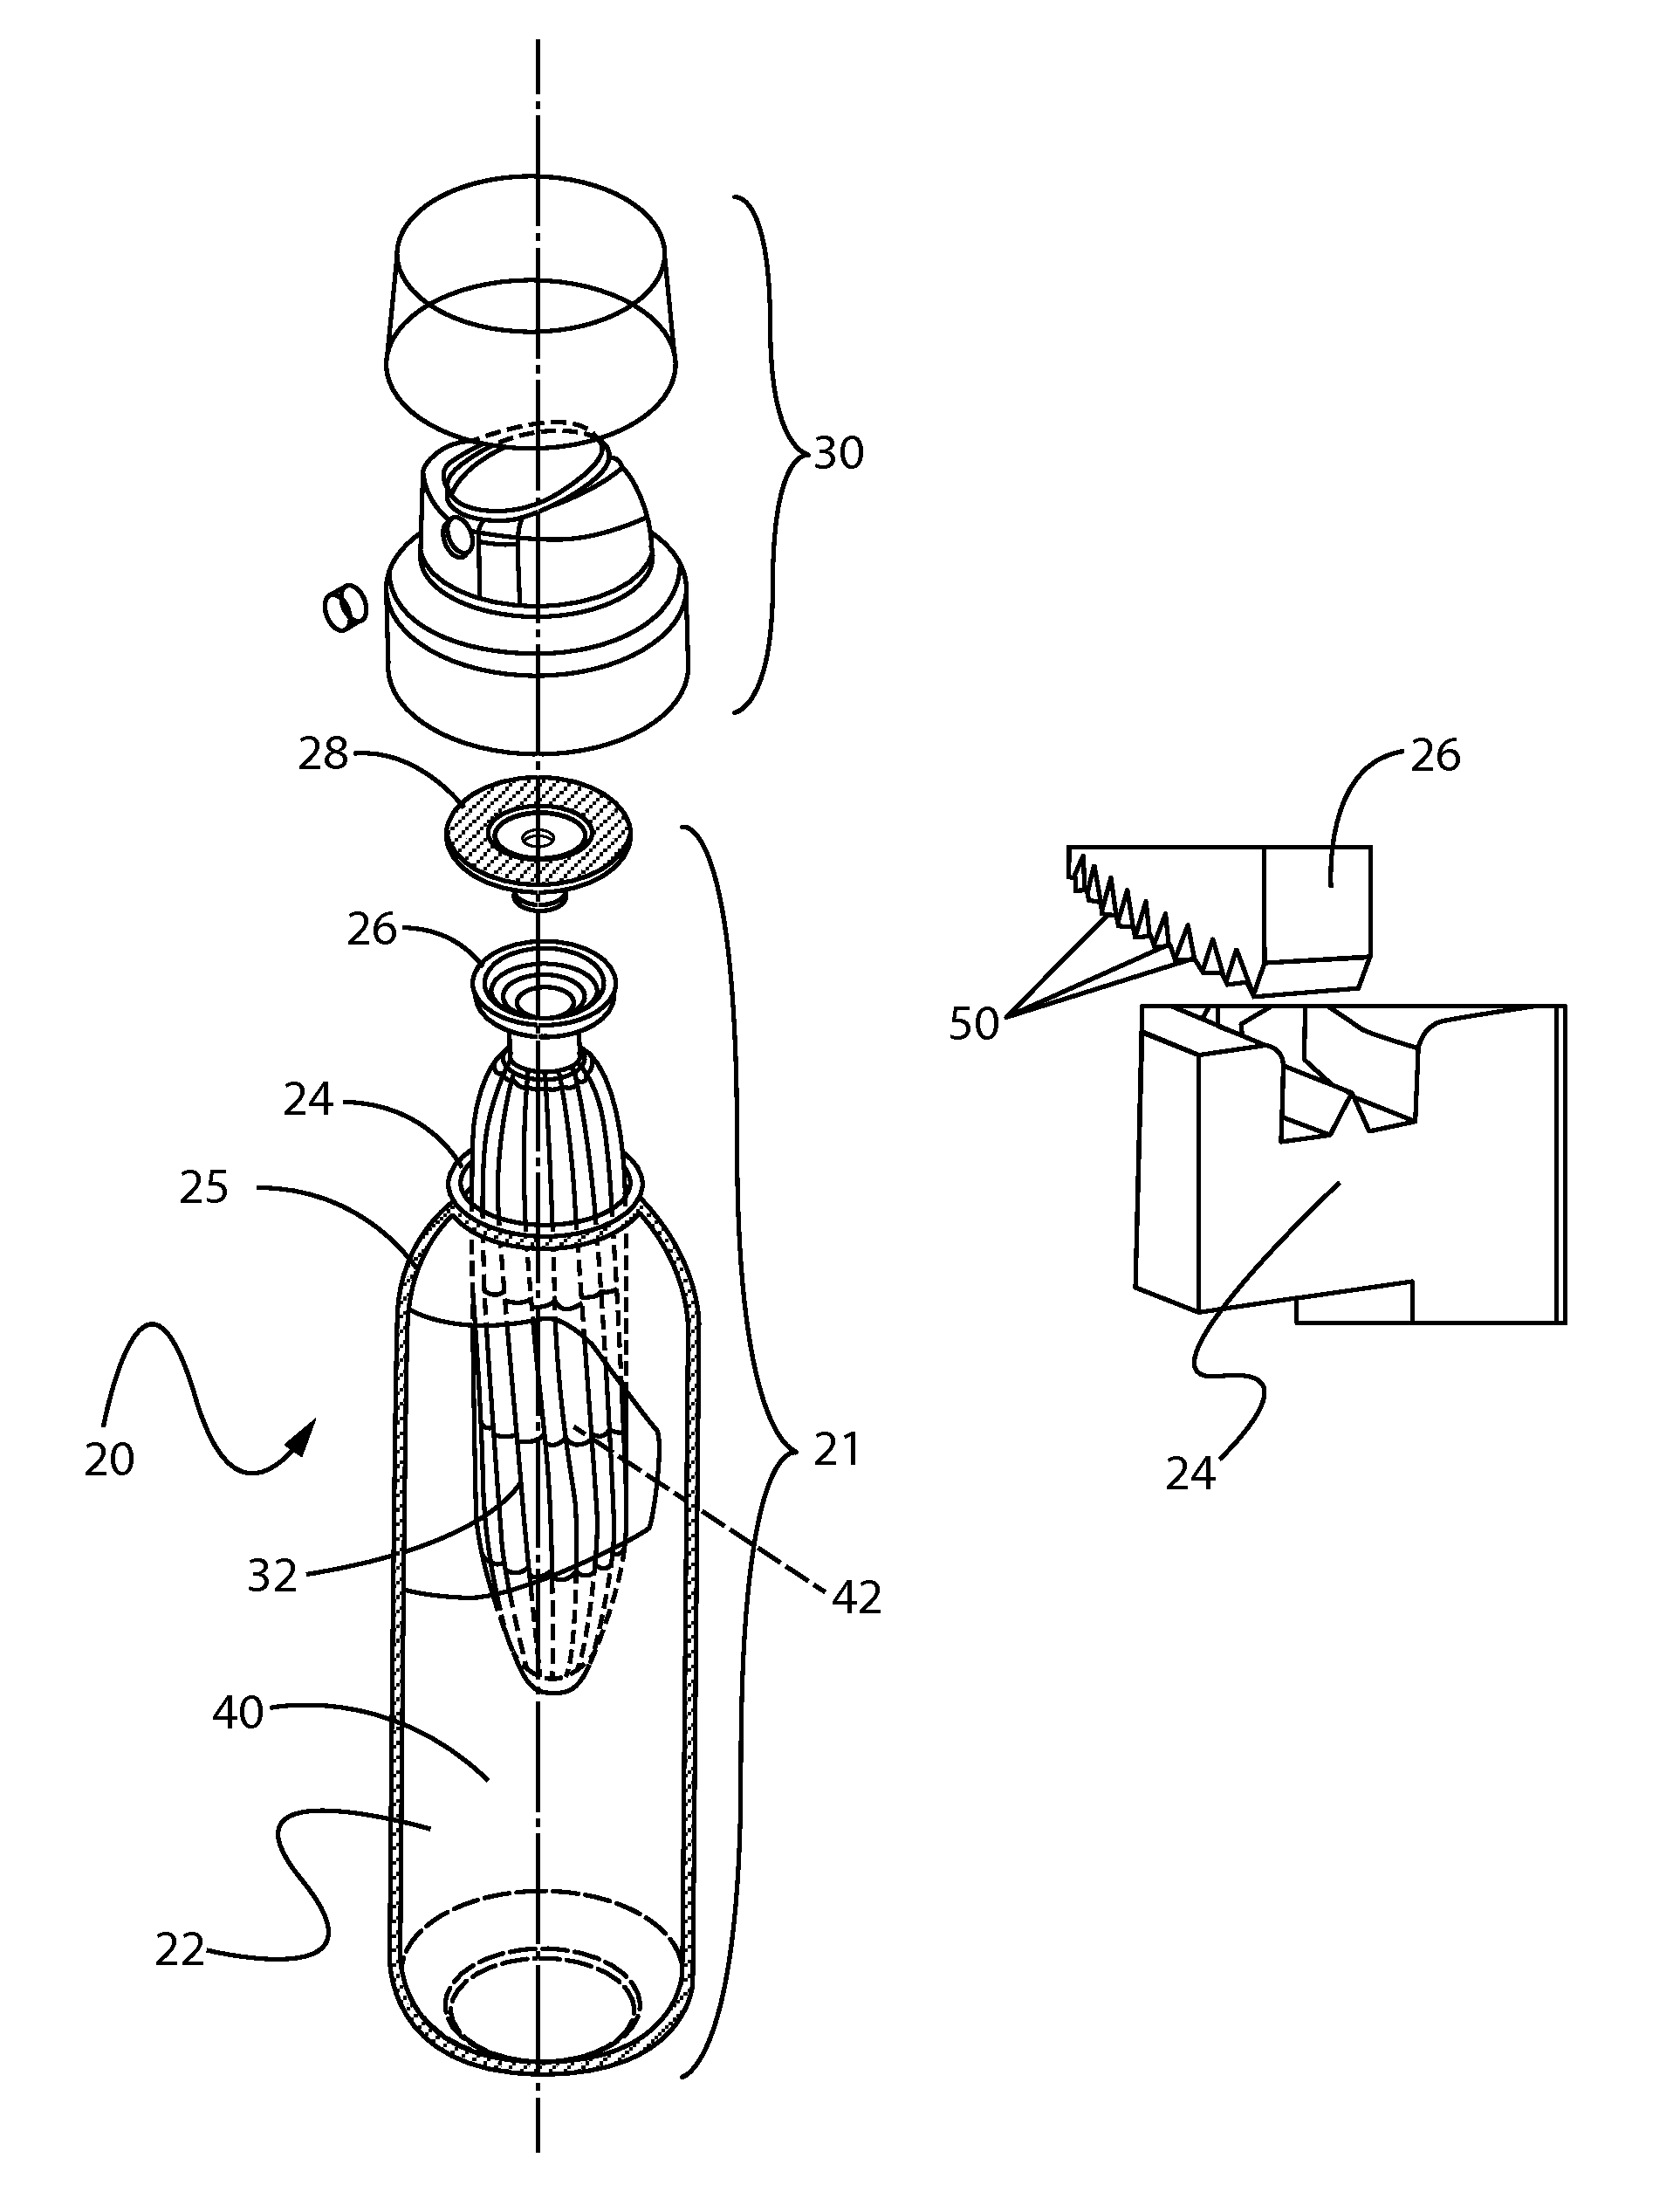 Method of filling and sealing an aerosol dispenser